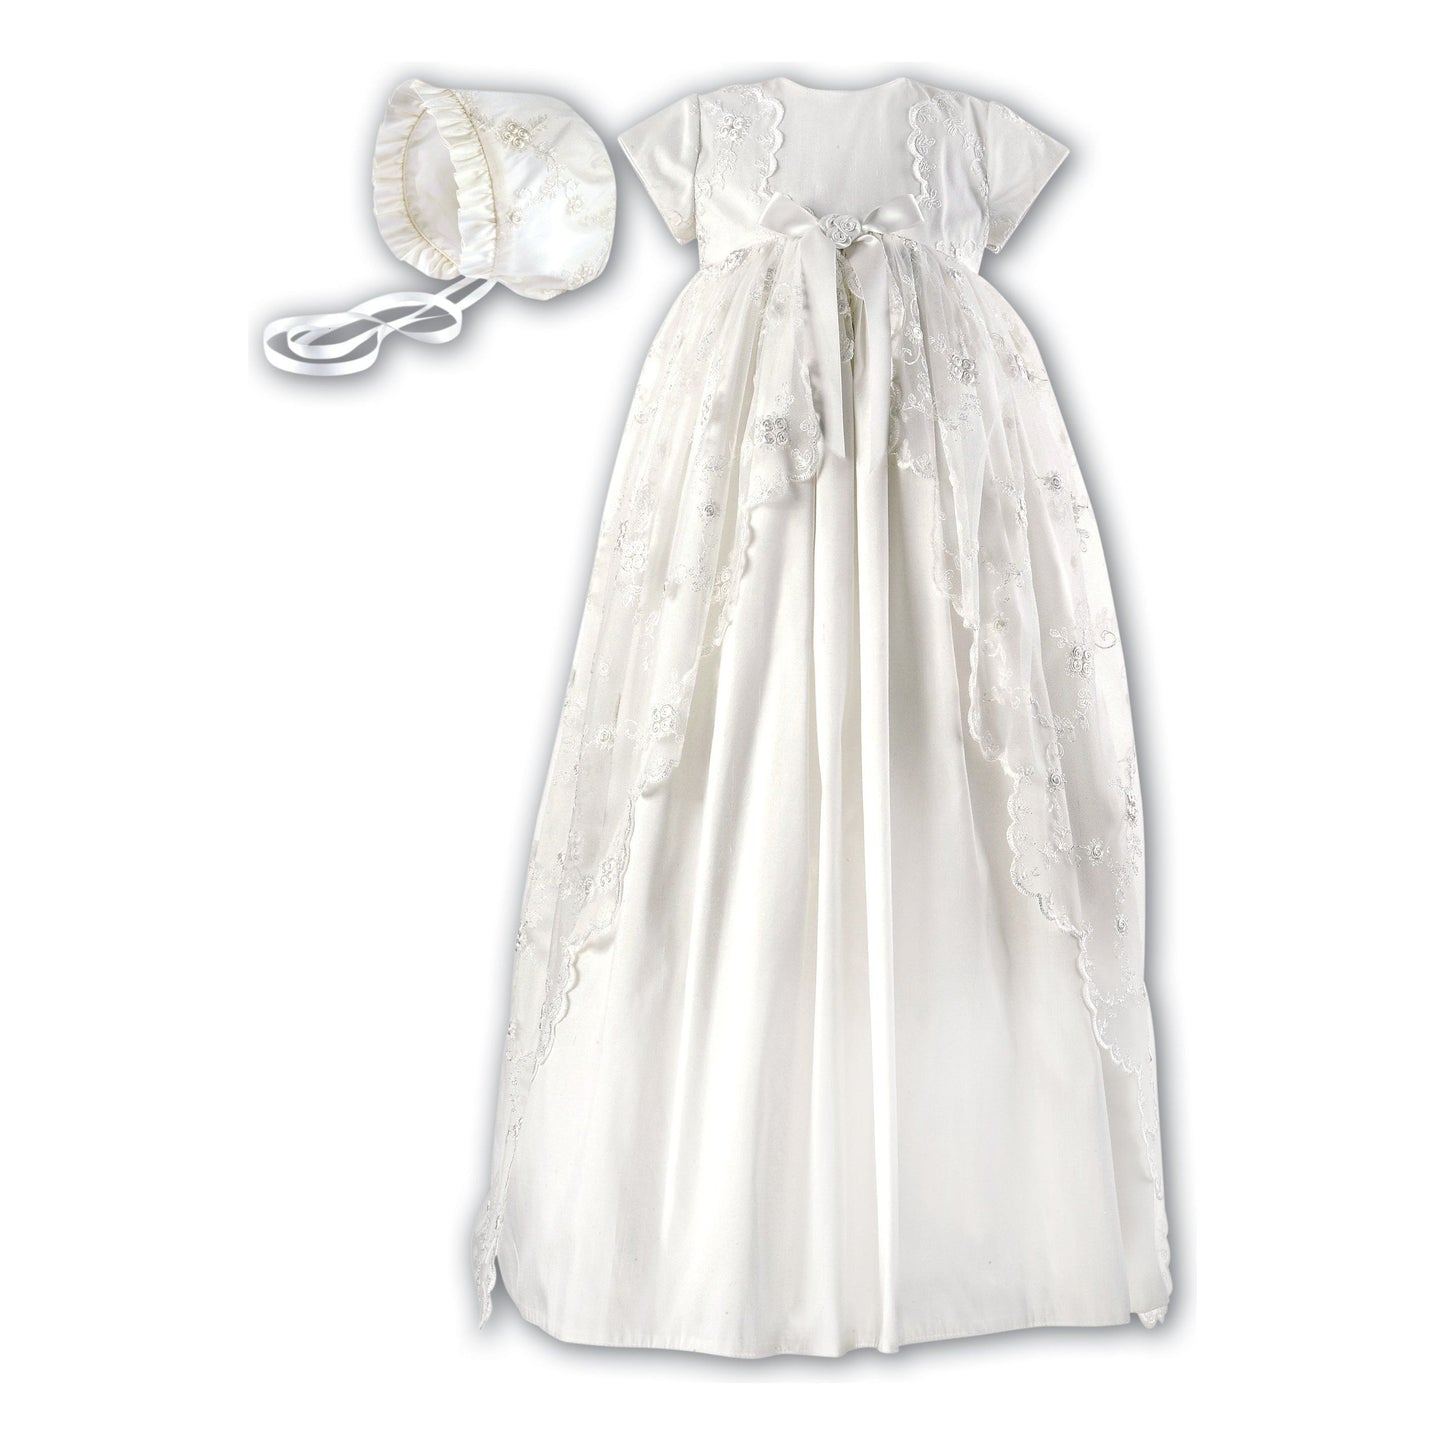 Christening Gown w/Bonnet, Vintage Lace, Ivory